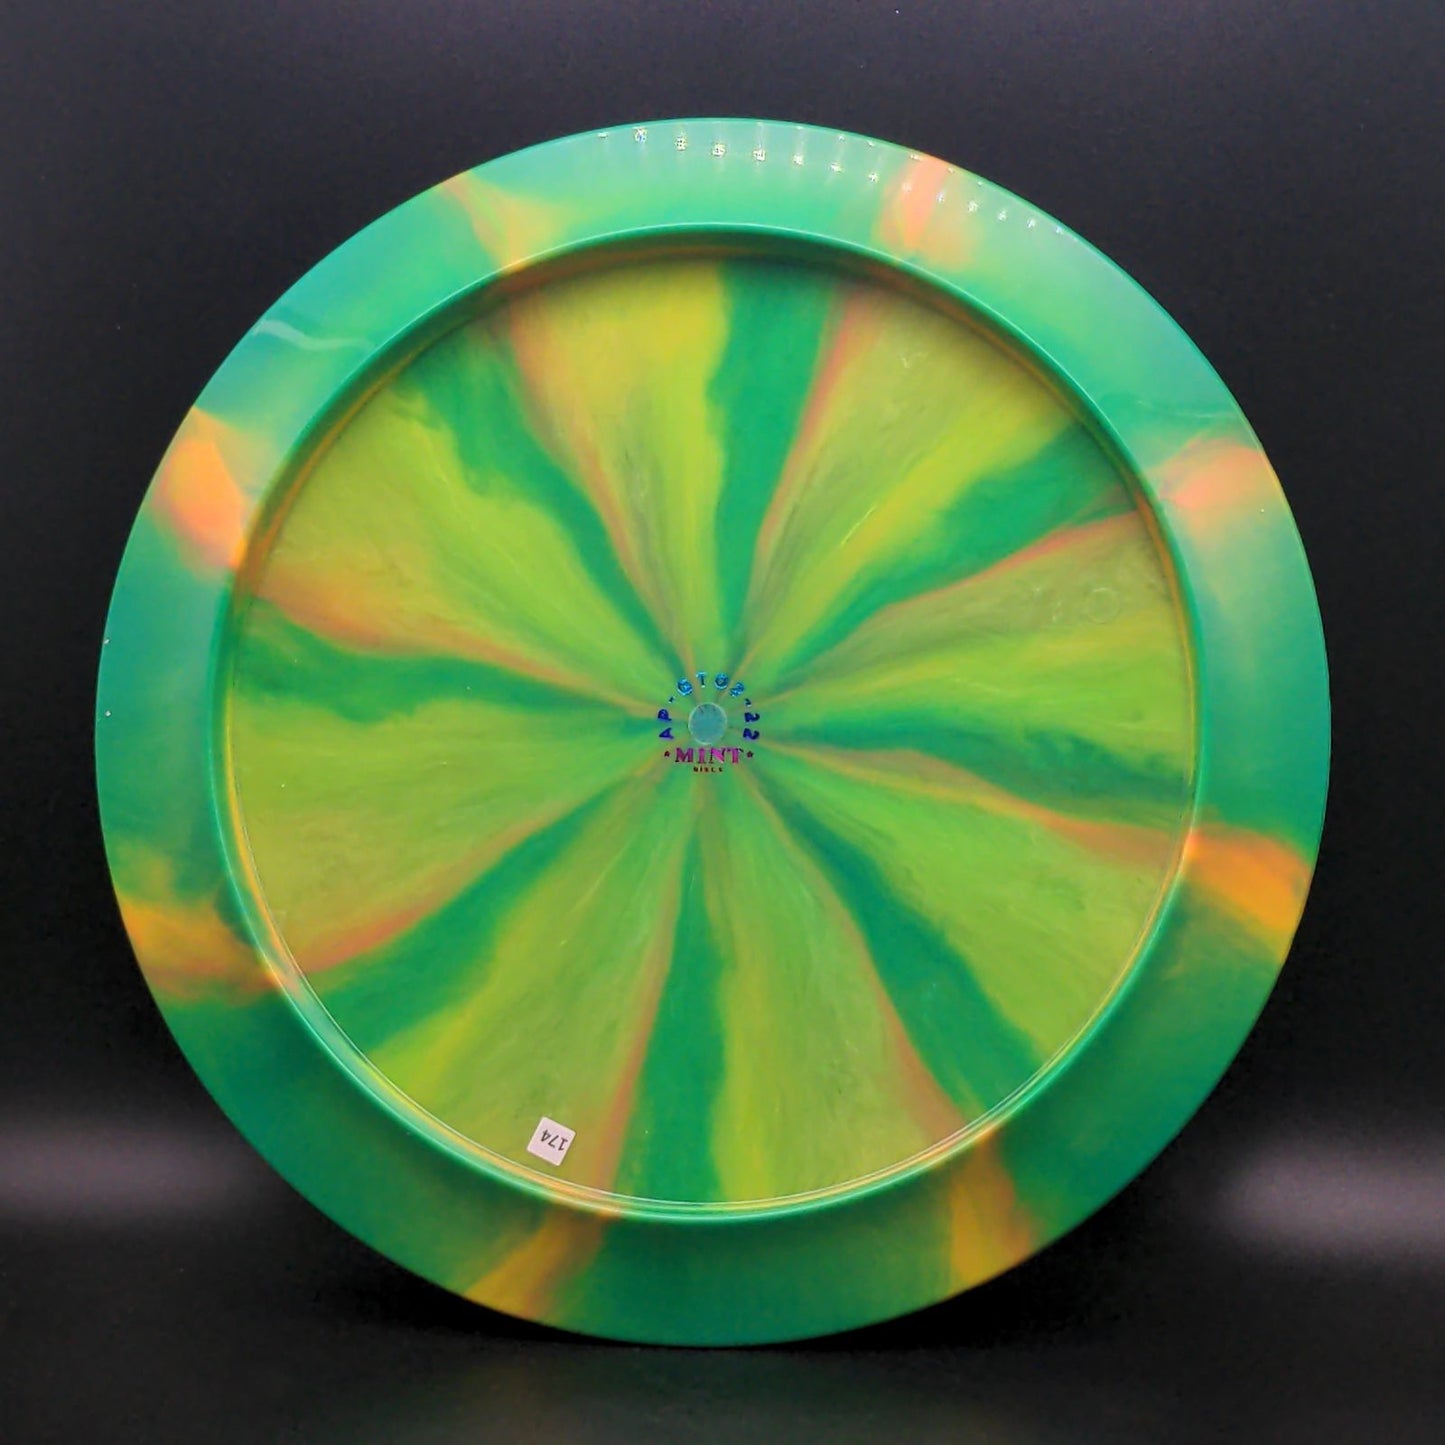 Swirl Apex Goat - "GOAT" LE MINT Discs